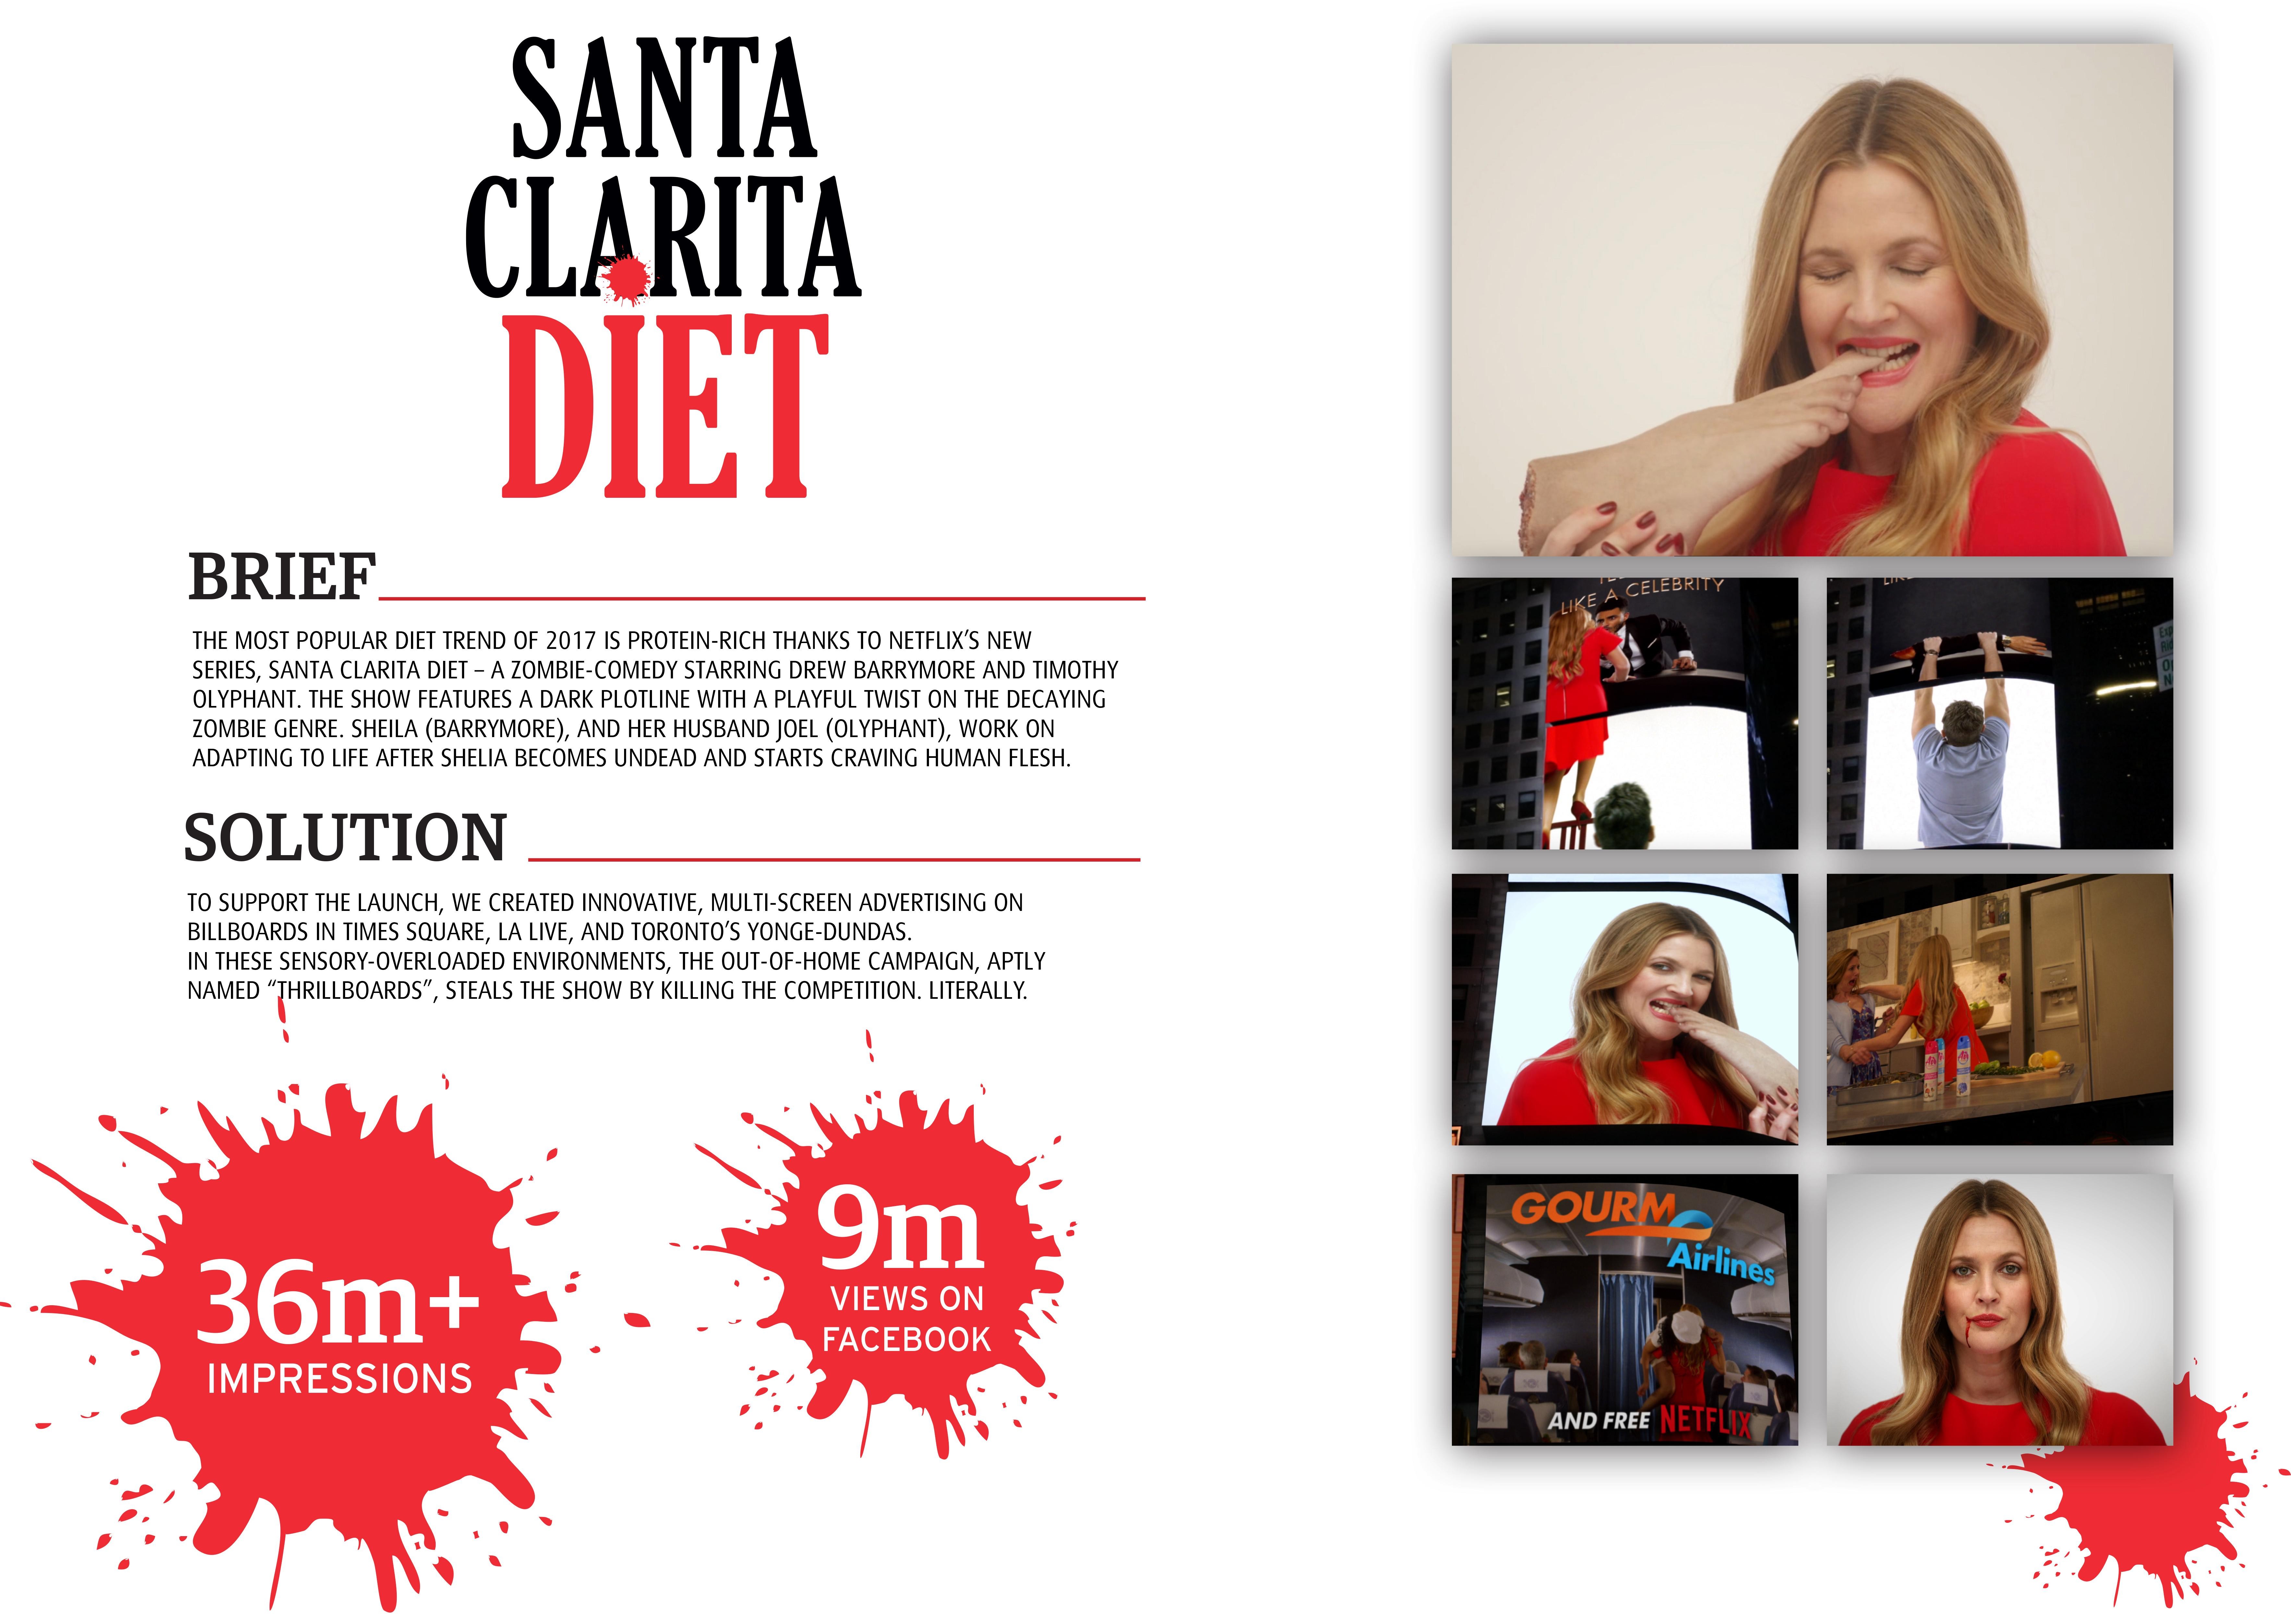 Netflix Originals: "Thrillboards" Grab Attention for "Santa Clarita Diet"